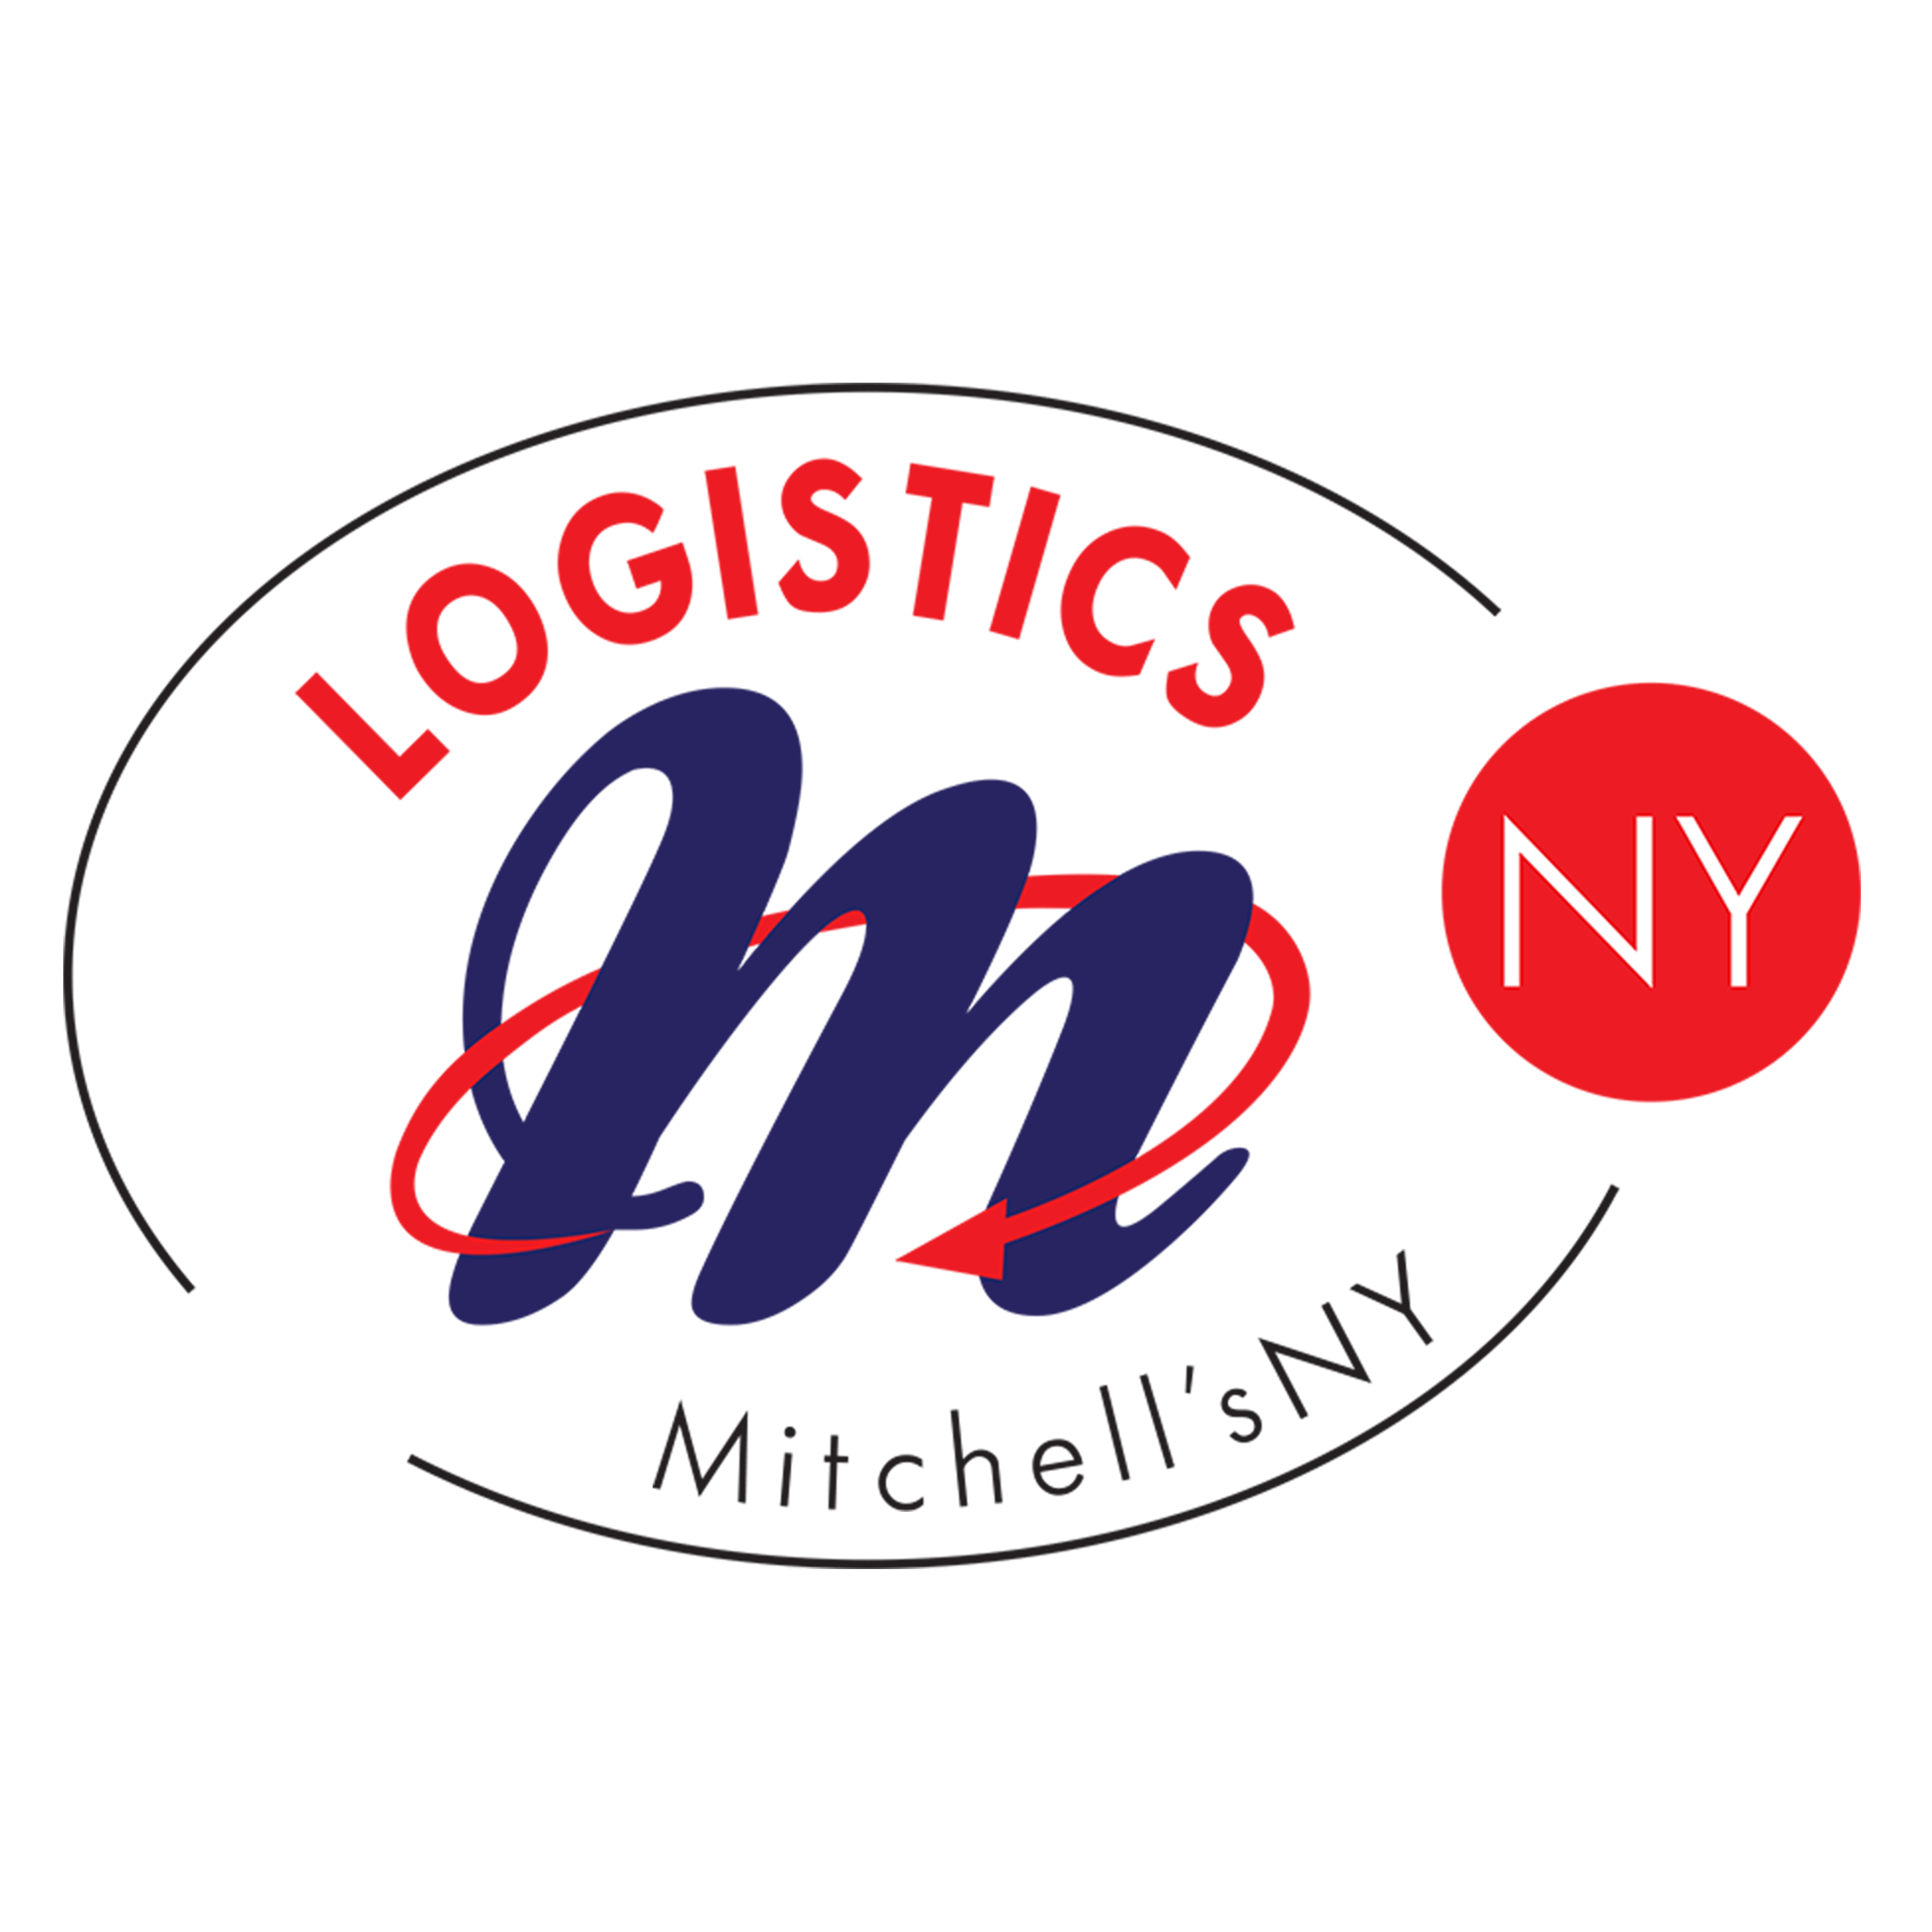 Mitchell'sNY Logistics in Boston